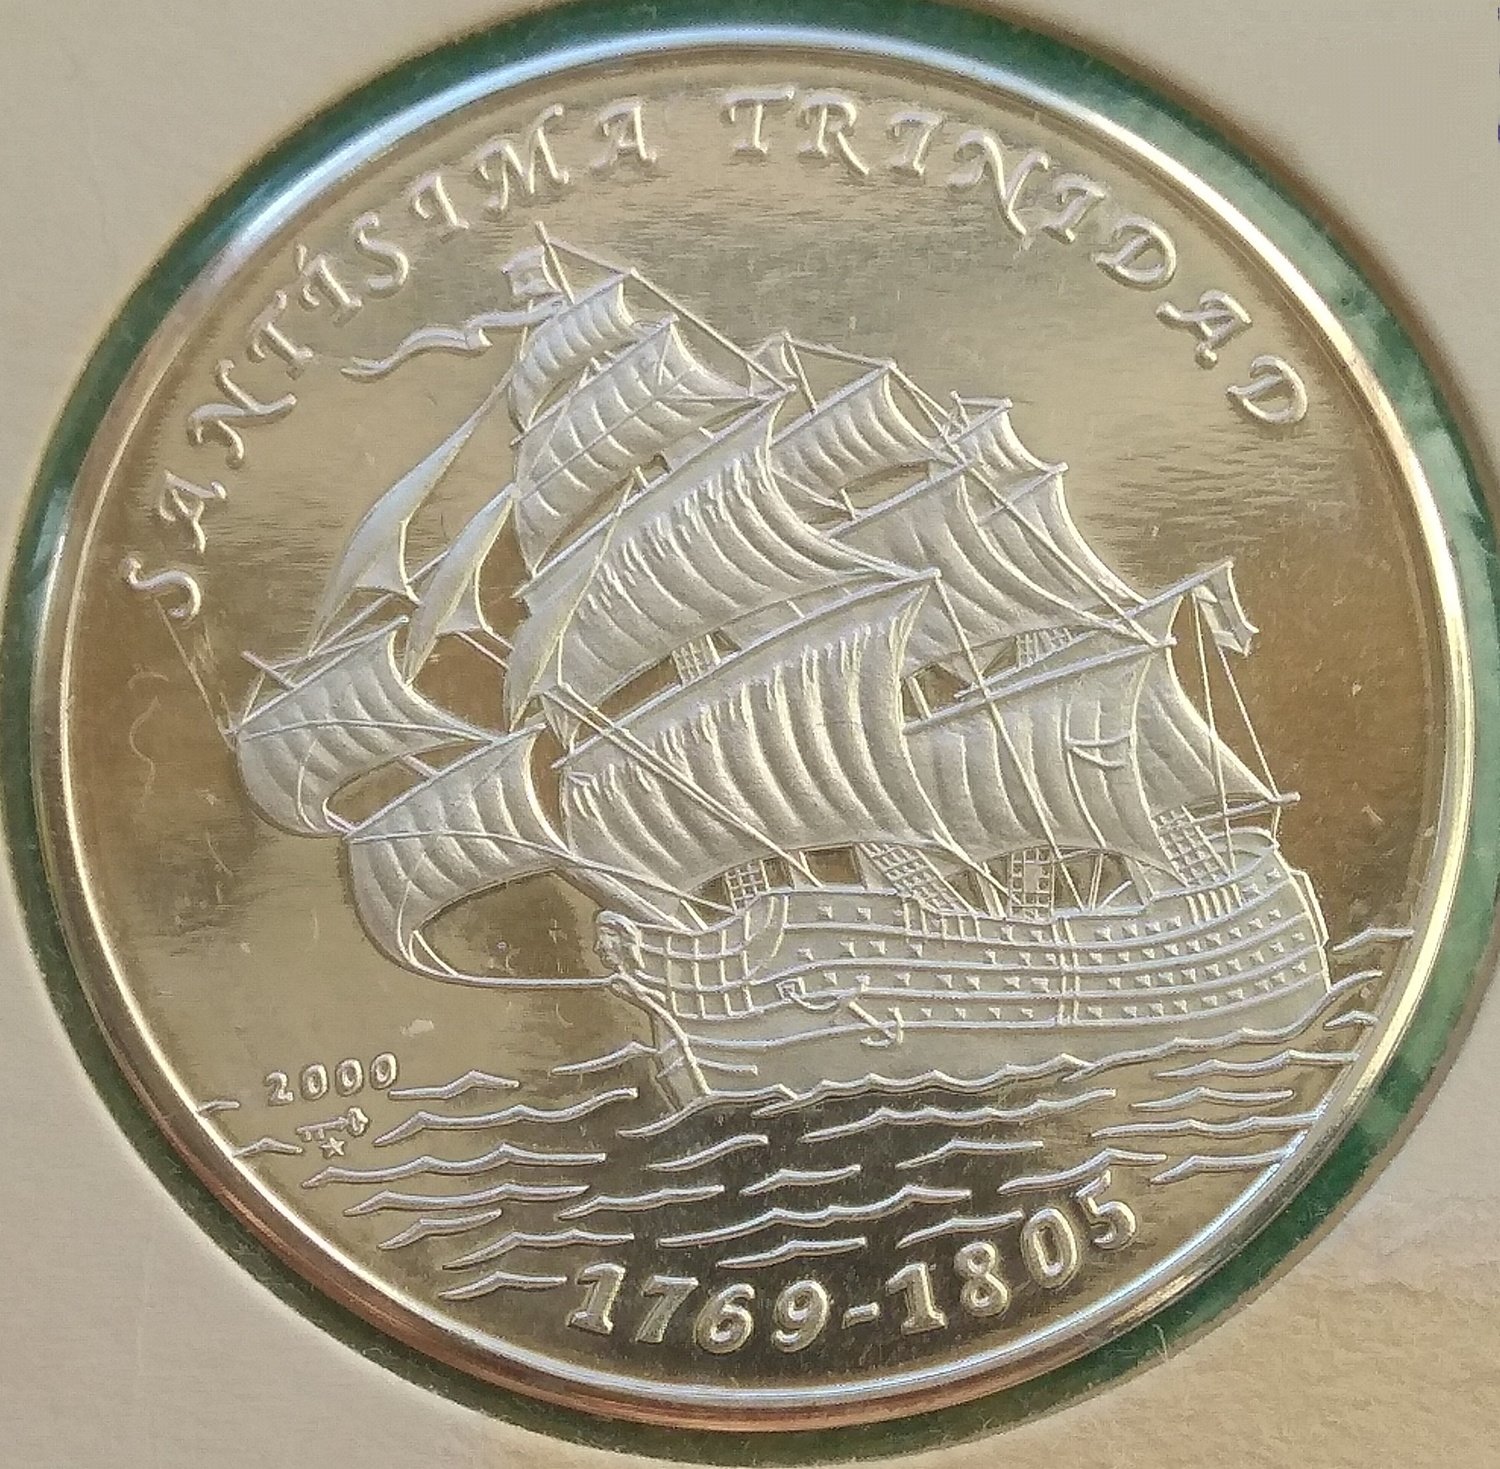 Cuba. 2000. 10 pesos. Series: Sailing ships. #01. 1769-1805. Ship Santísima Trinidad. 0.999 Silver. 0.4787 Oz ASW. 15.00g. KM#758. PROOF. Mintage: 2,500